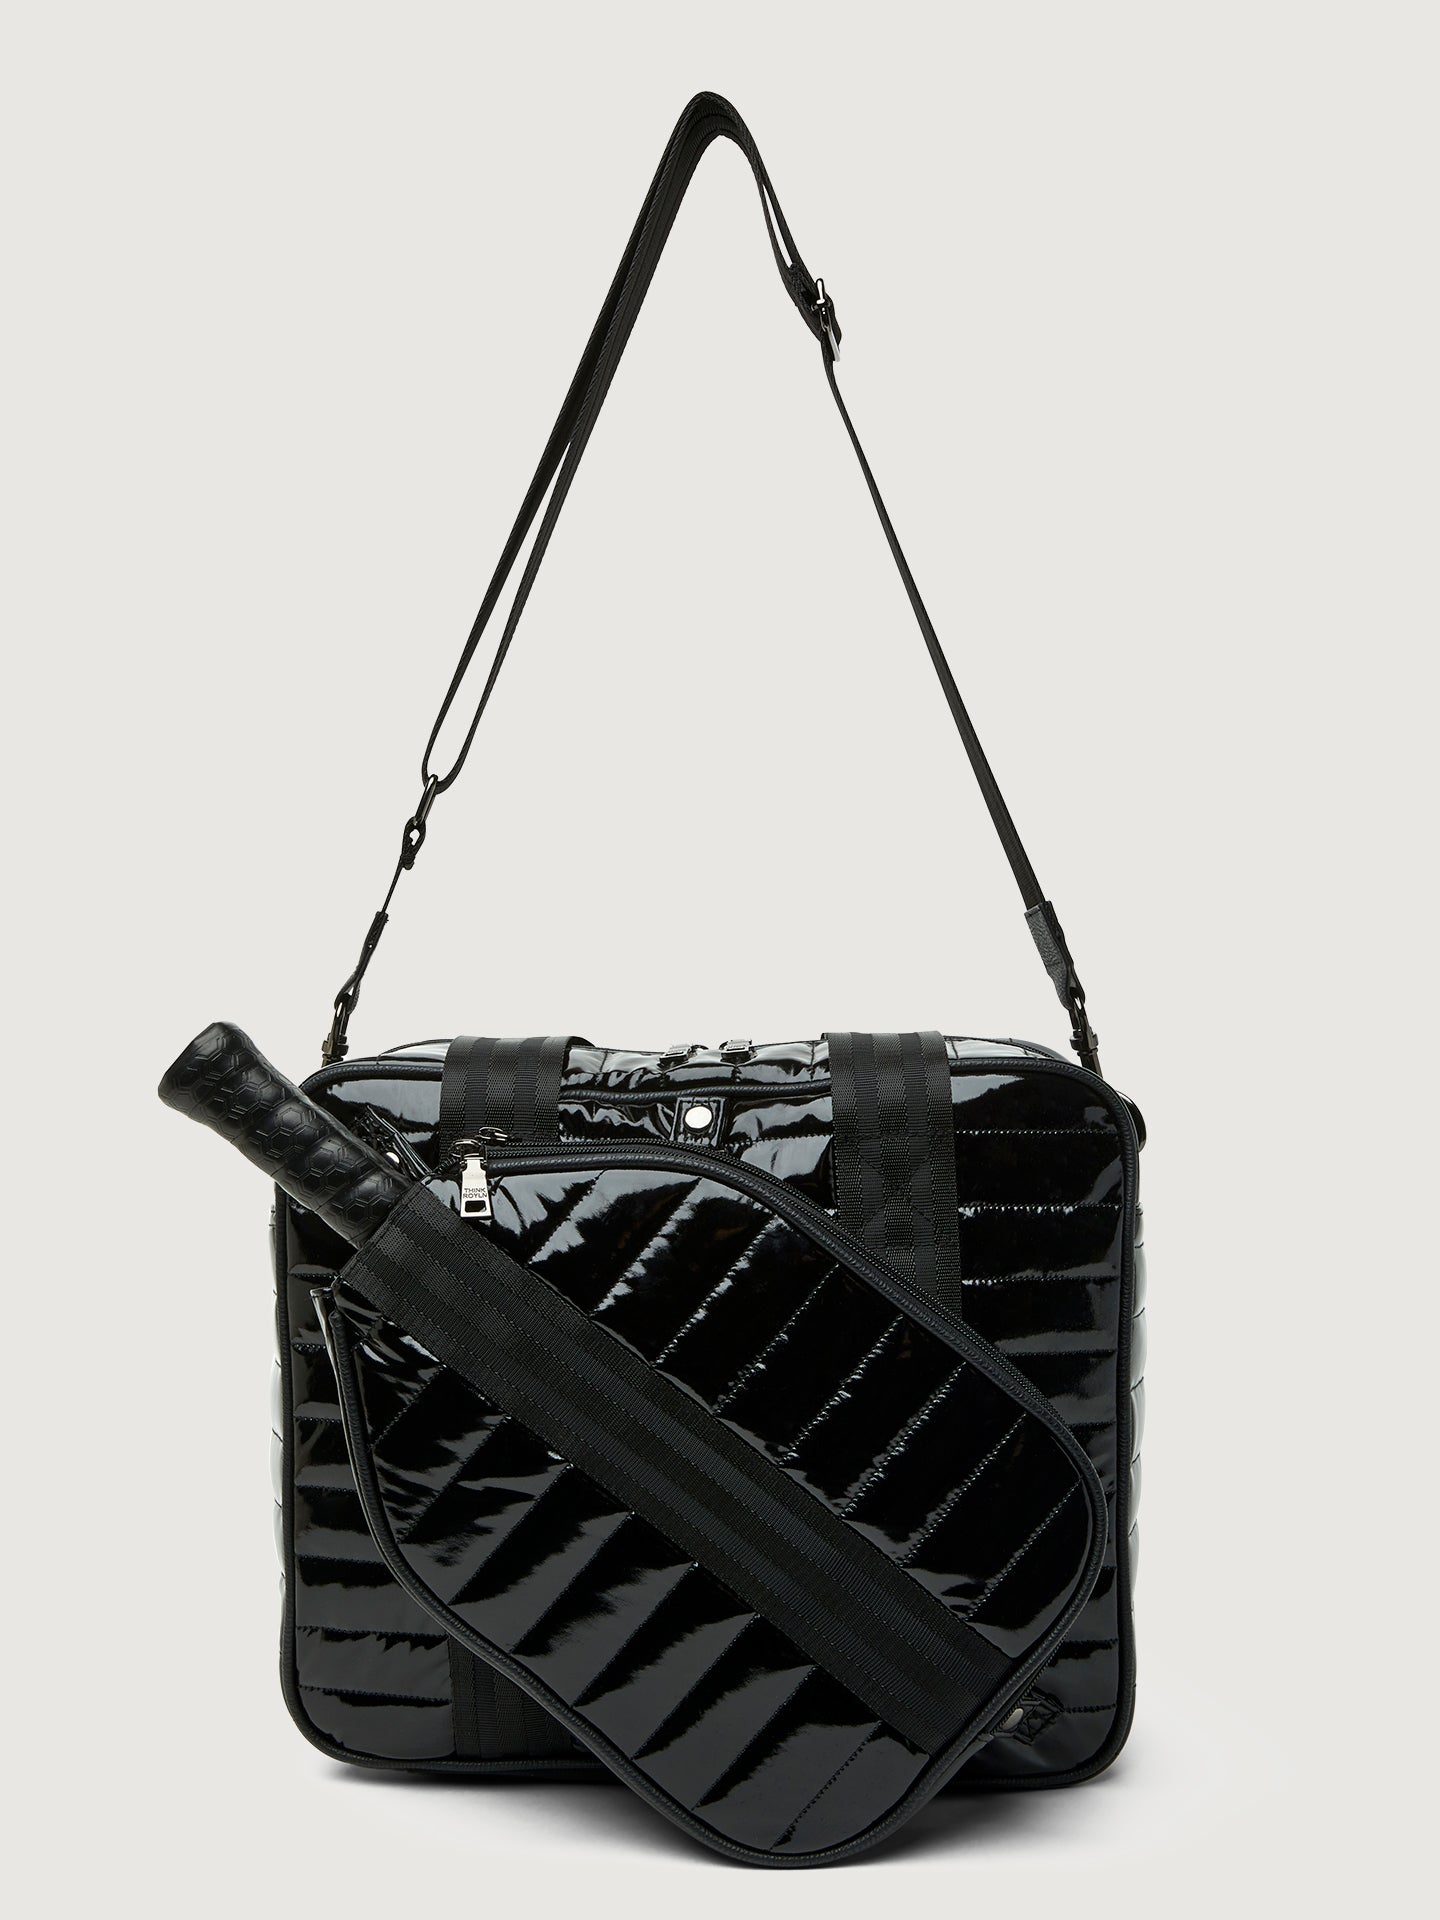 Think Royln - Luxe Carly Handbag